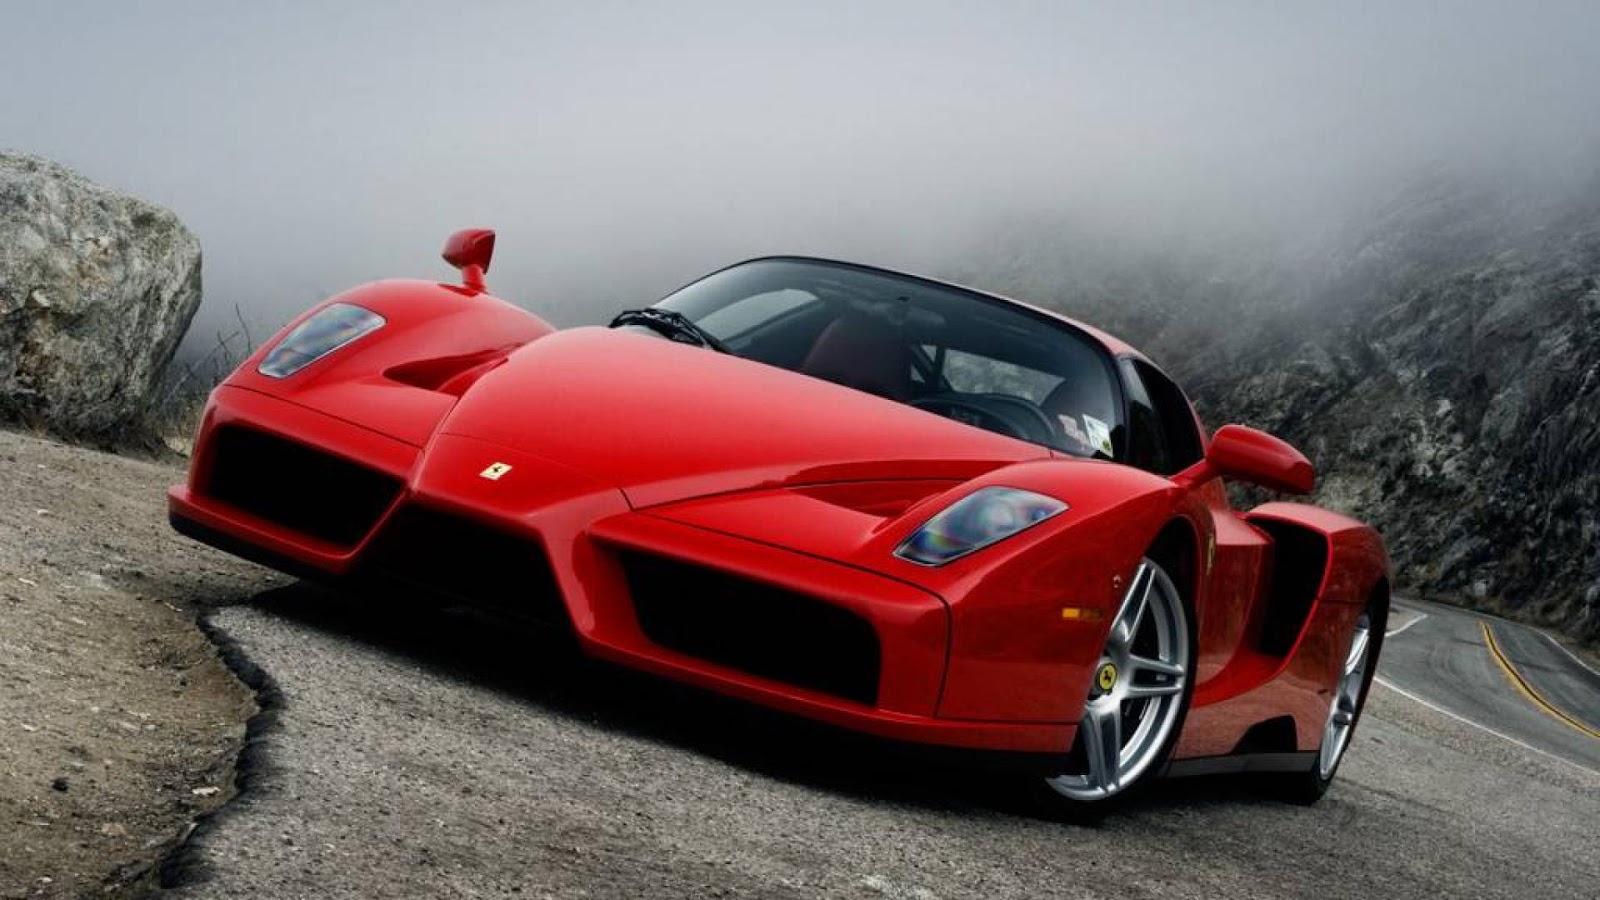  Gambar  Transportasi Gambar  Mobil  Sport Ferrari  Enzo